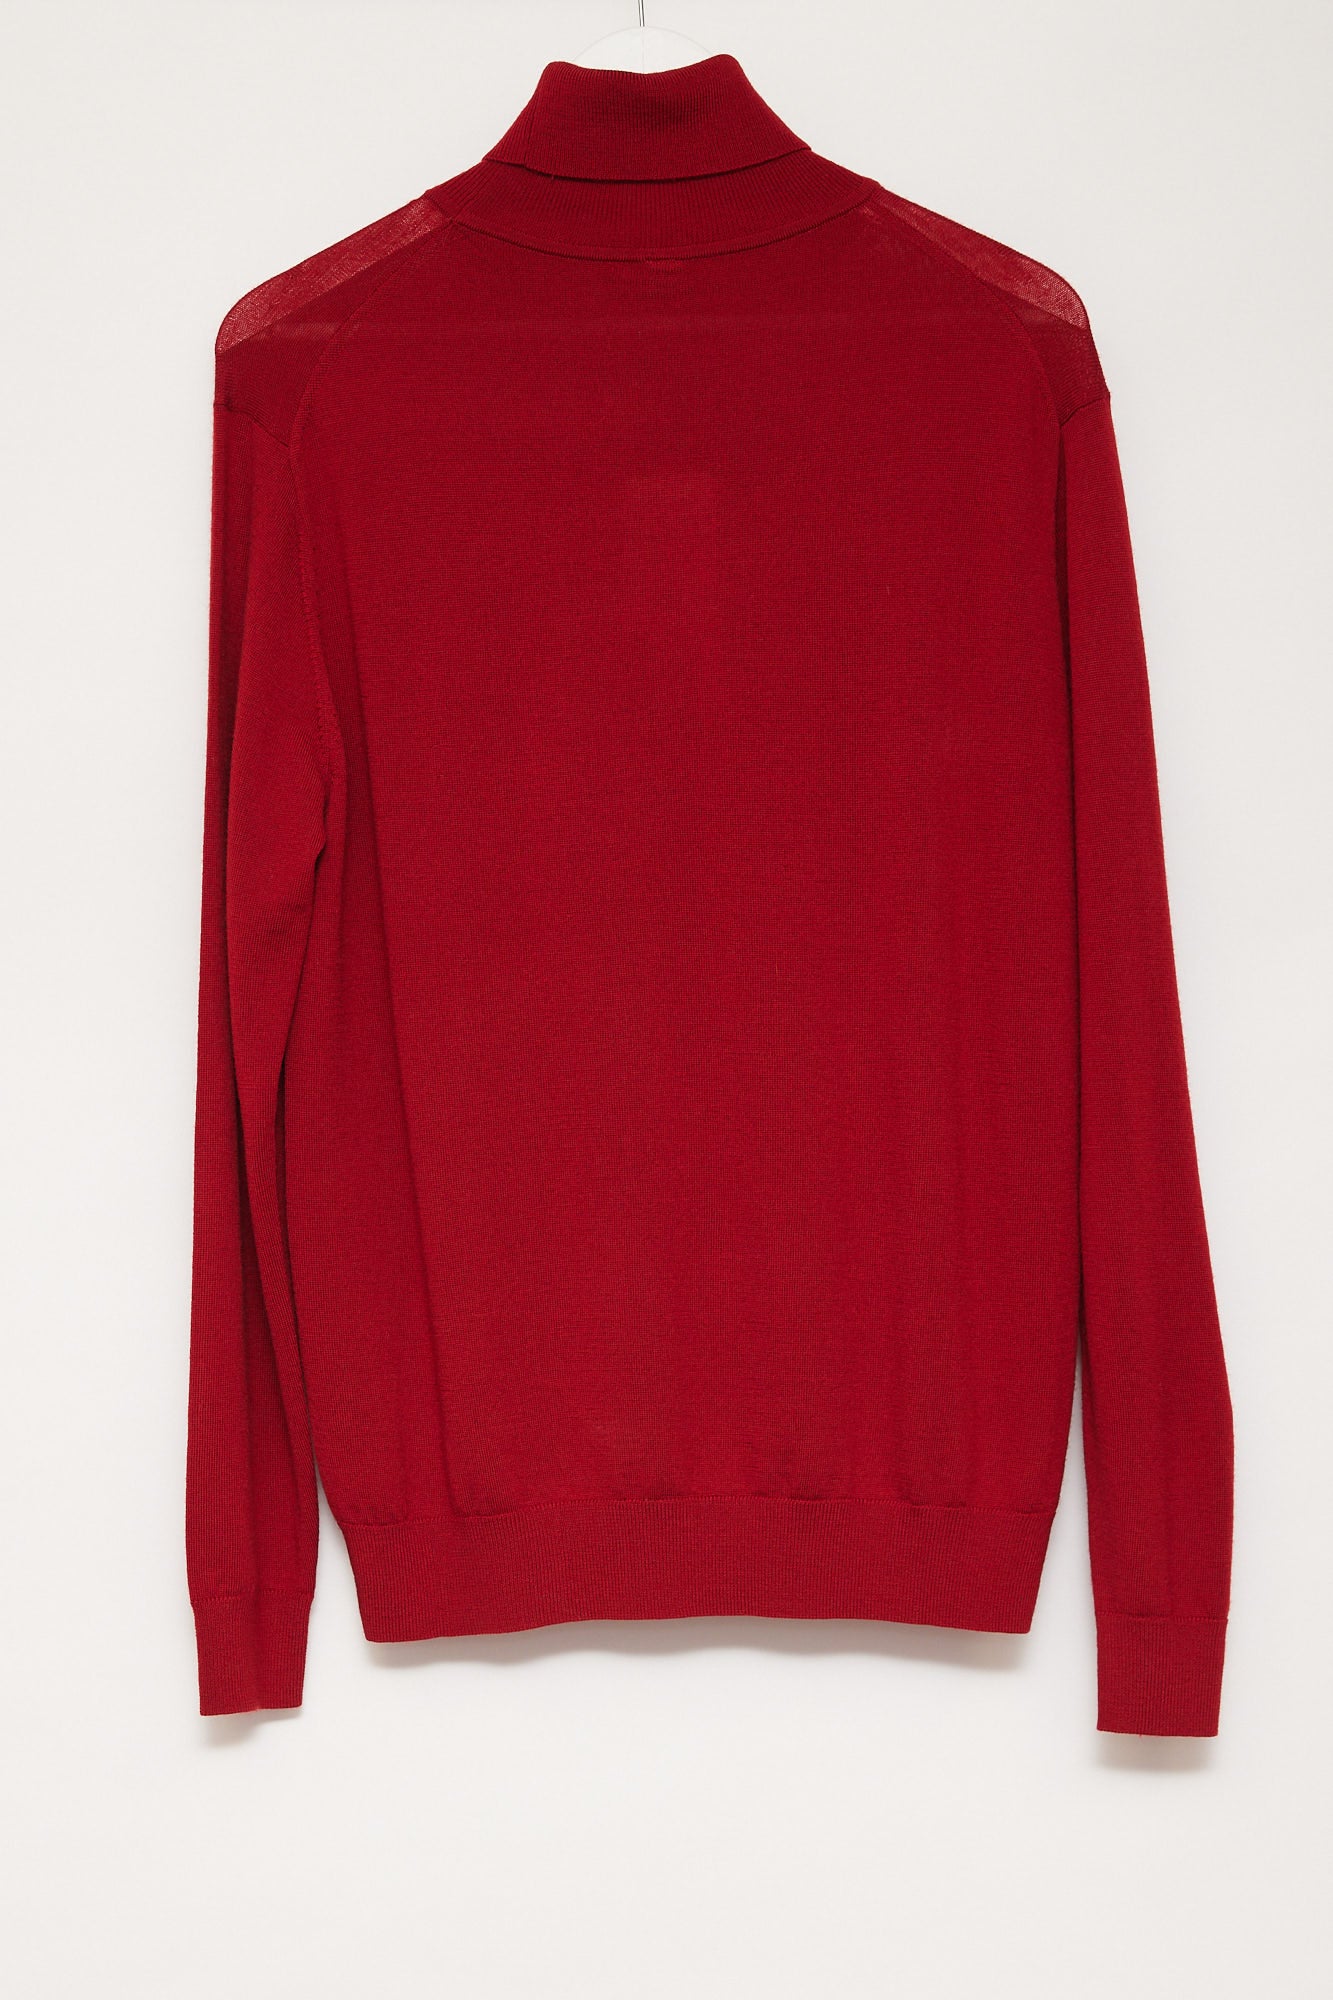 Mens knitted red roll neck jumper size medium